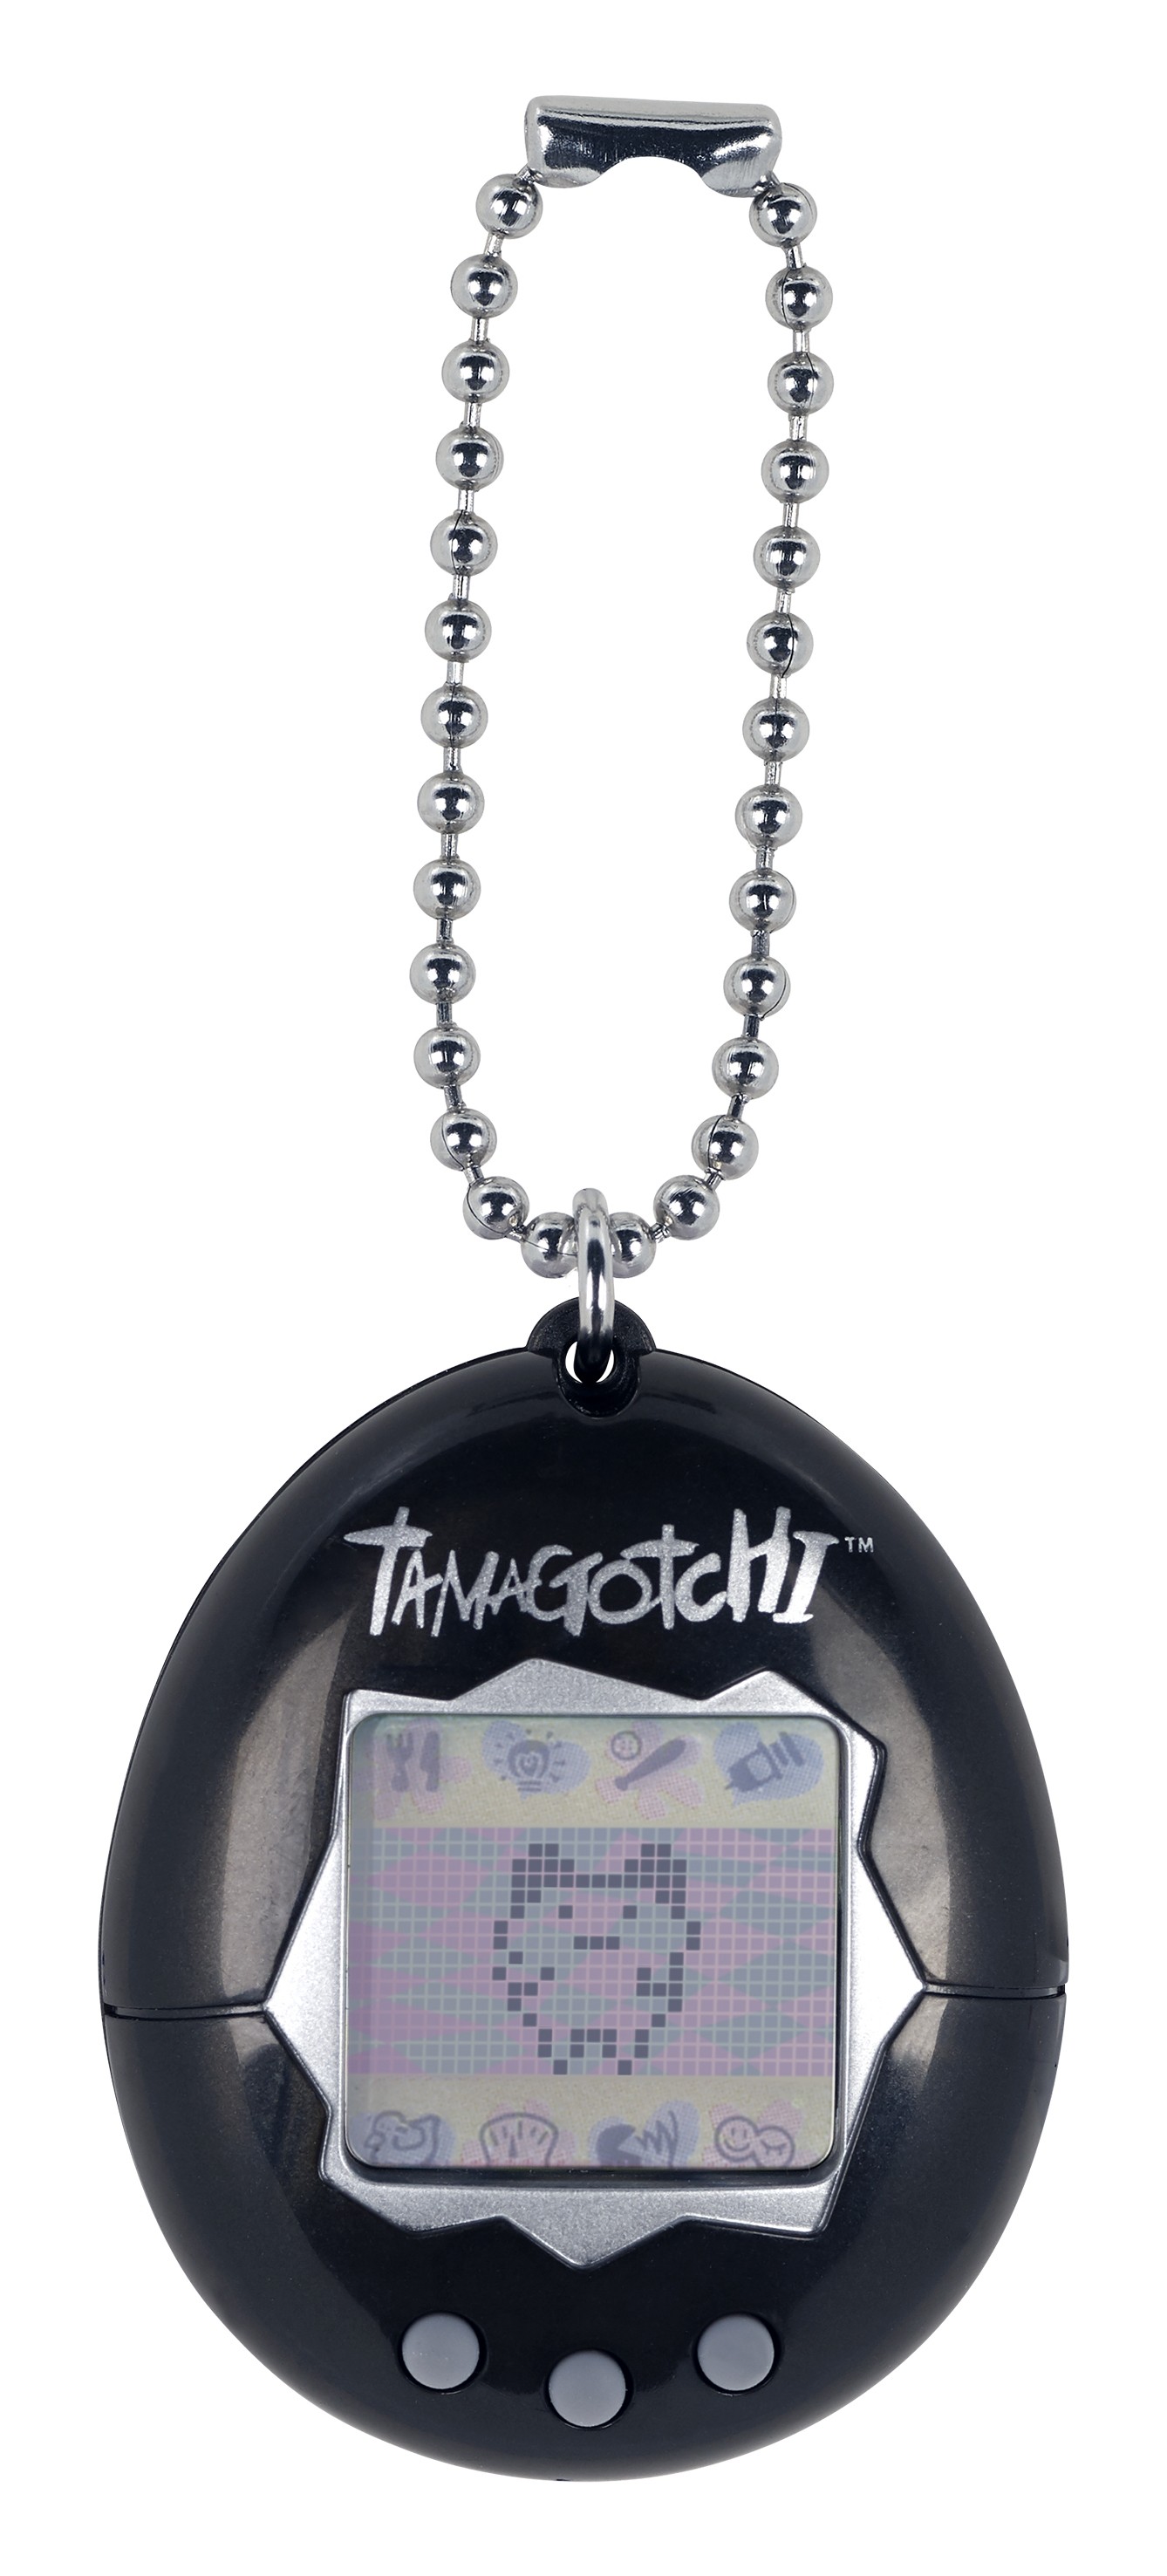 Tamagotchi 2019 Limited Edition Original Black